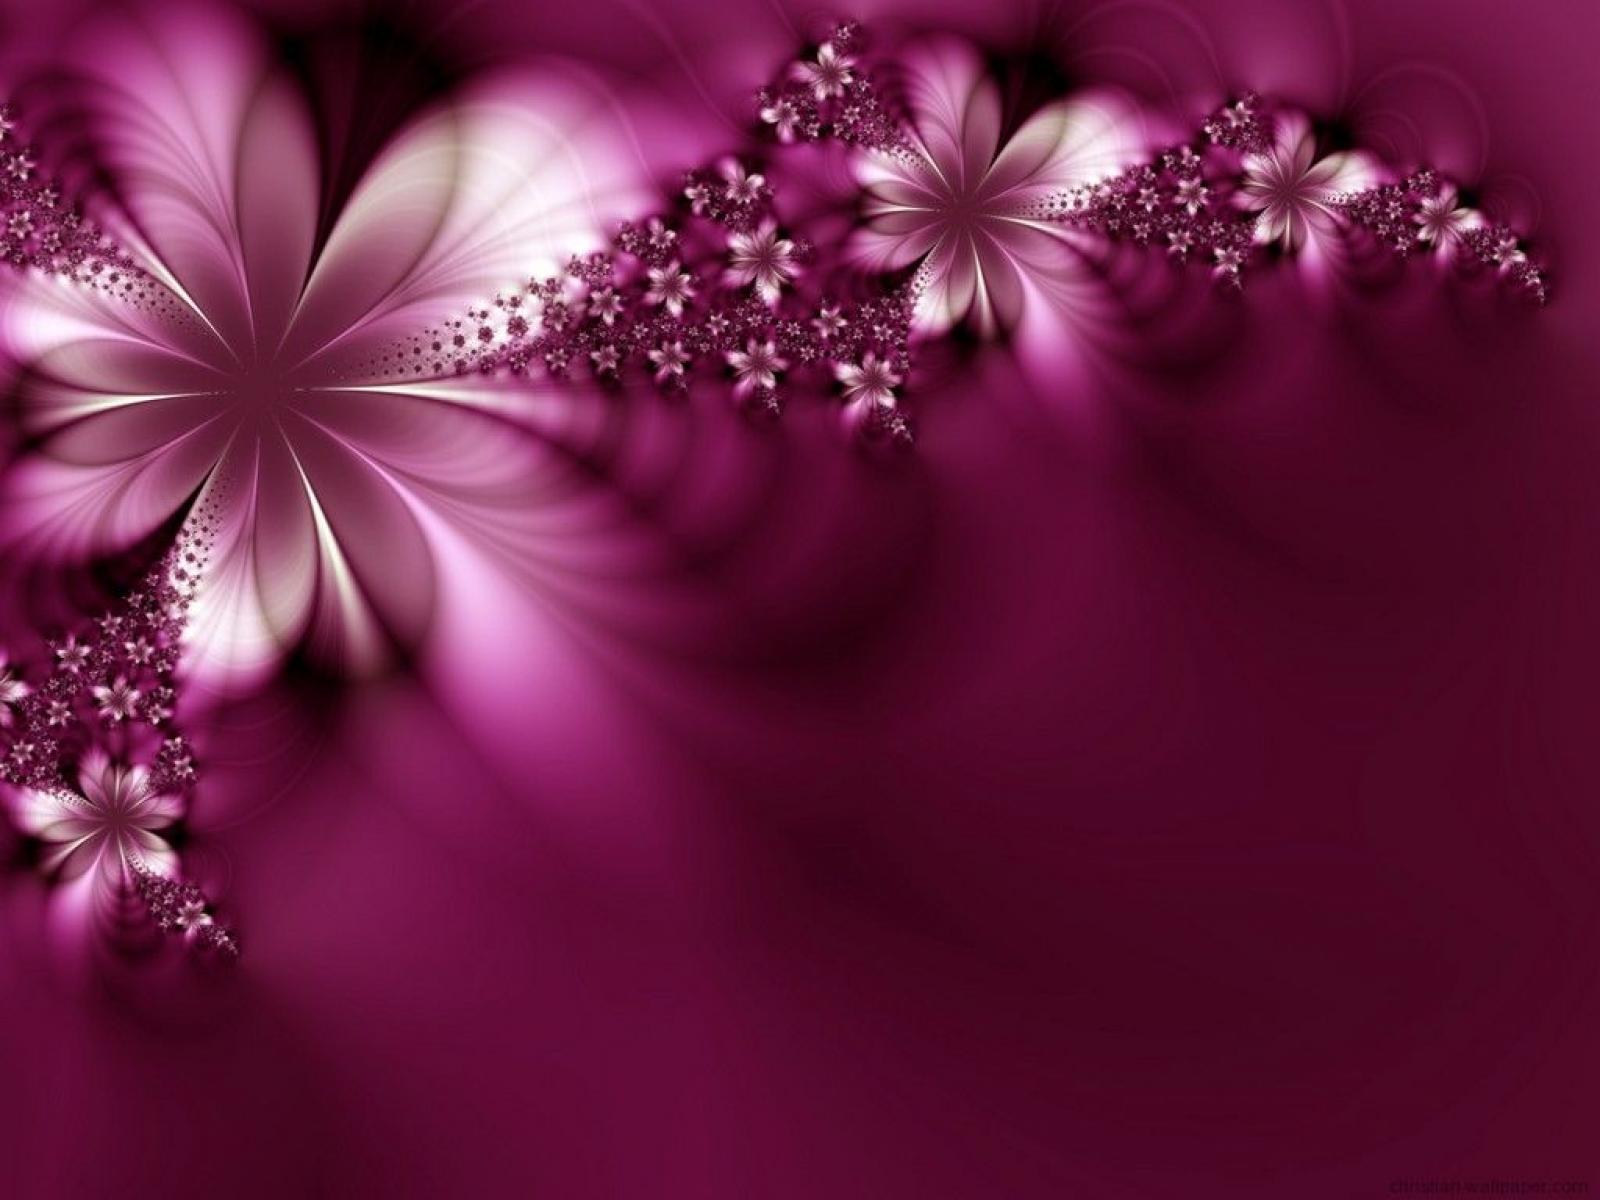 Purple Flowers Background Image 6 HD Wallpapercom